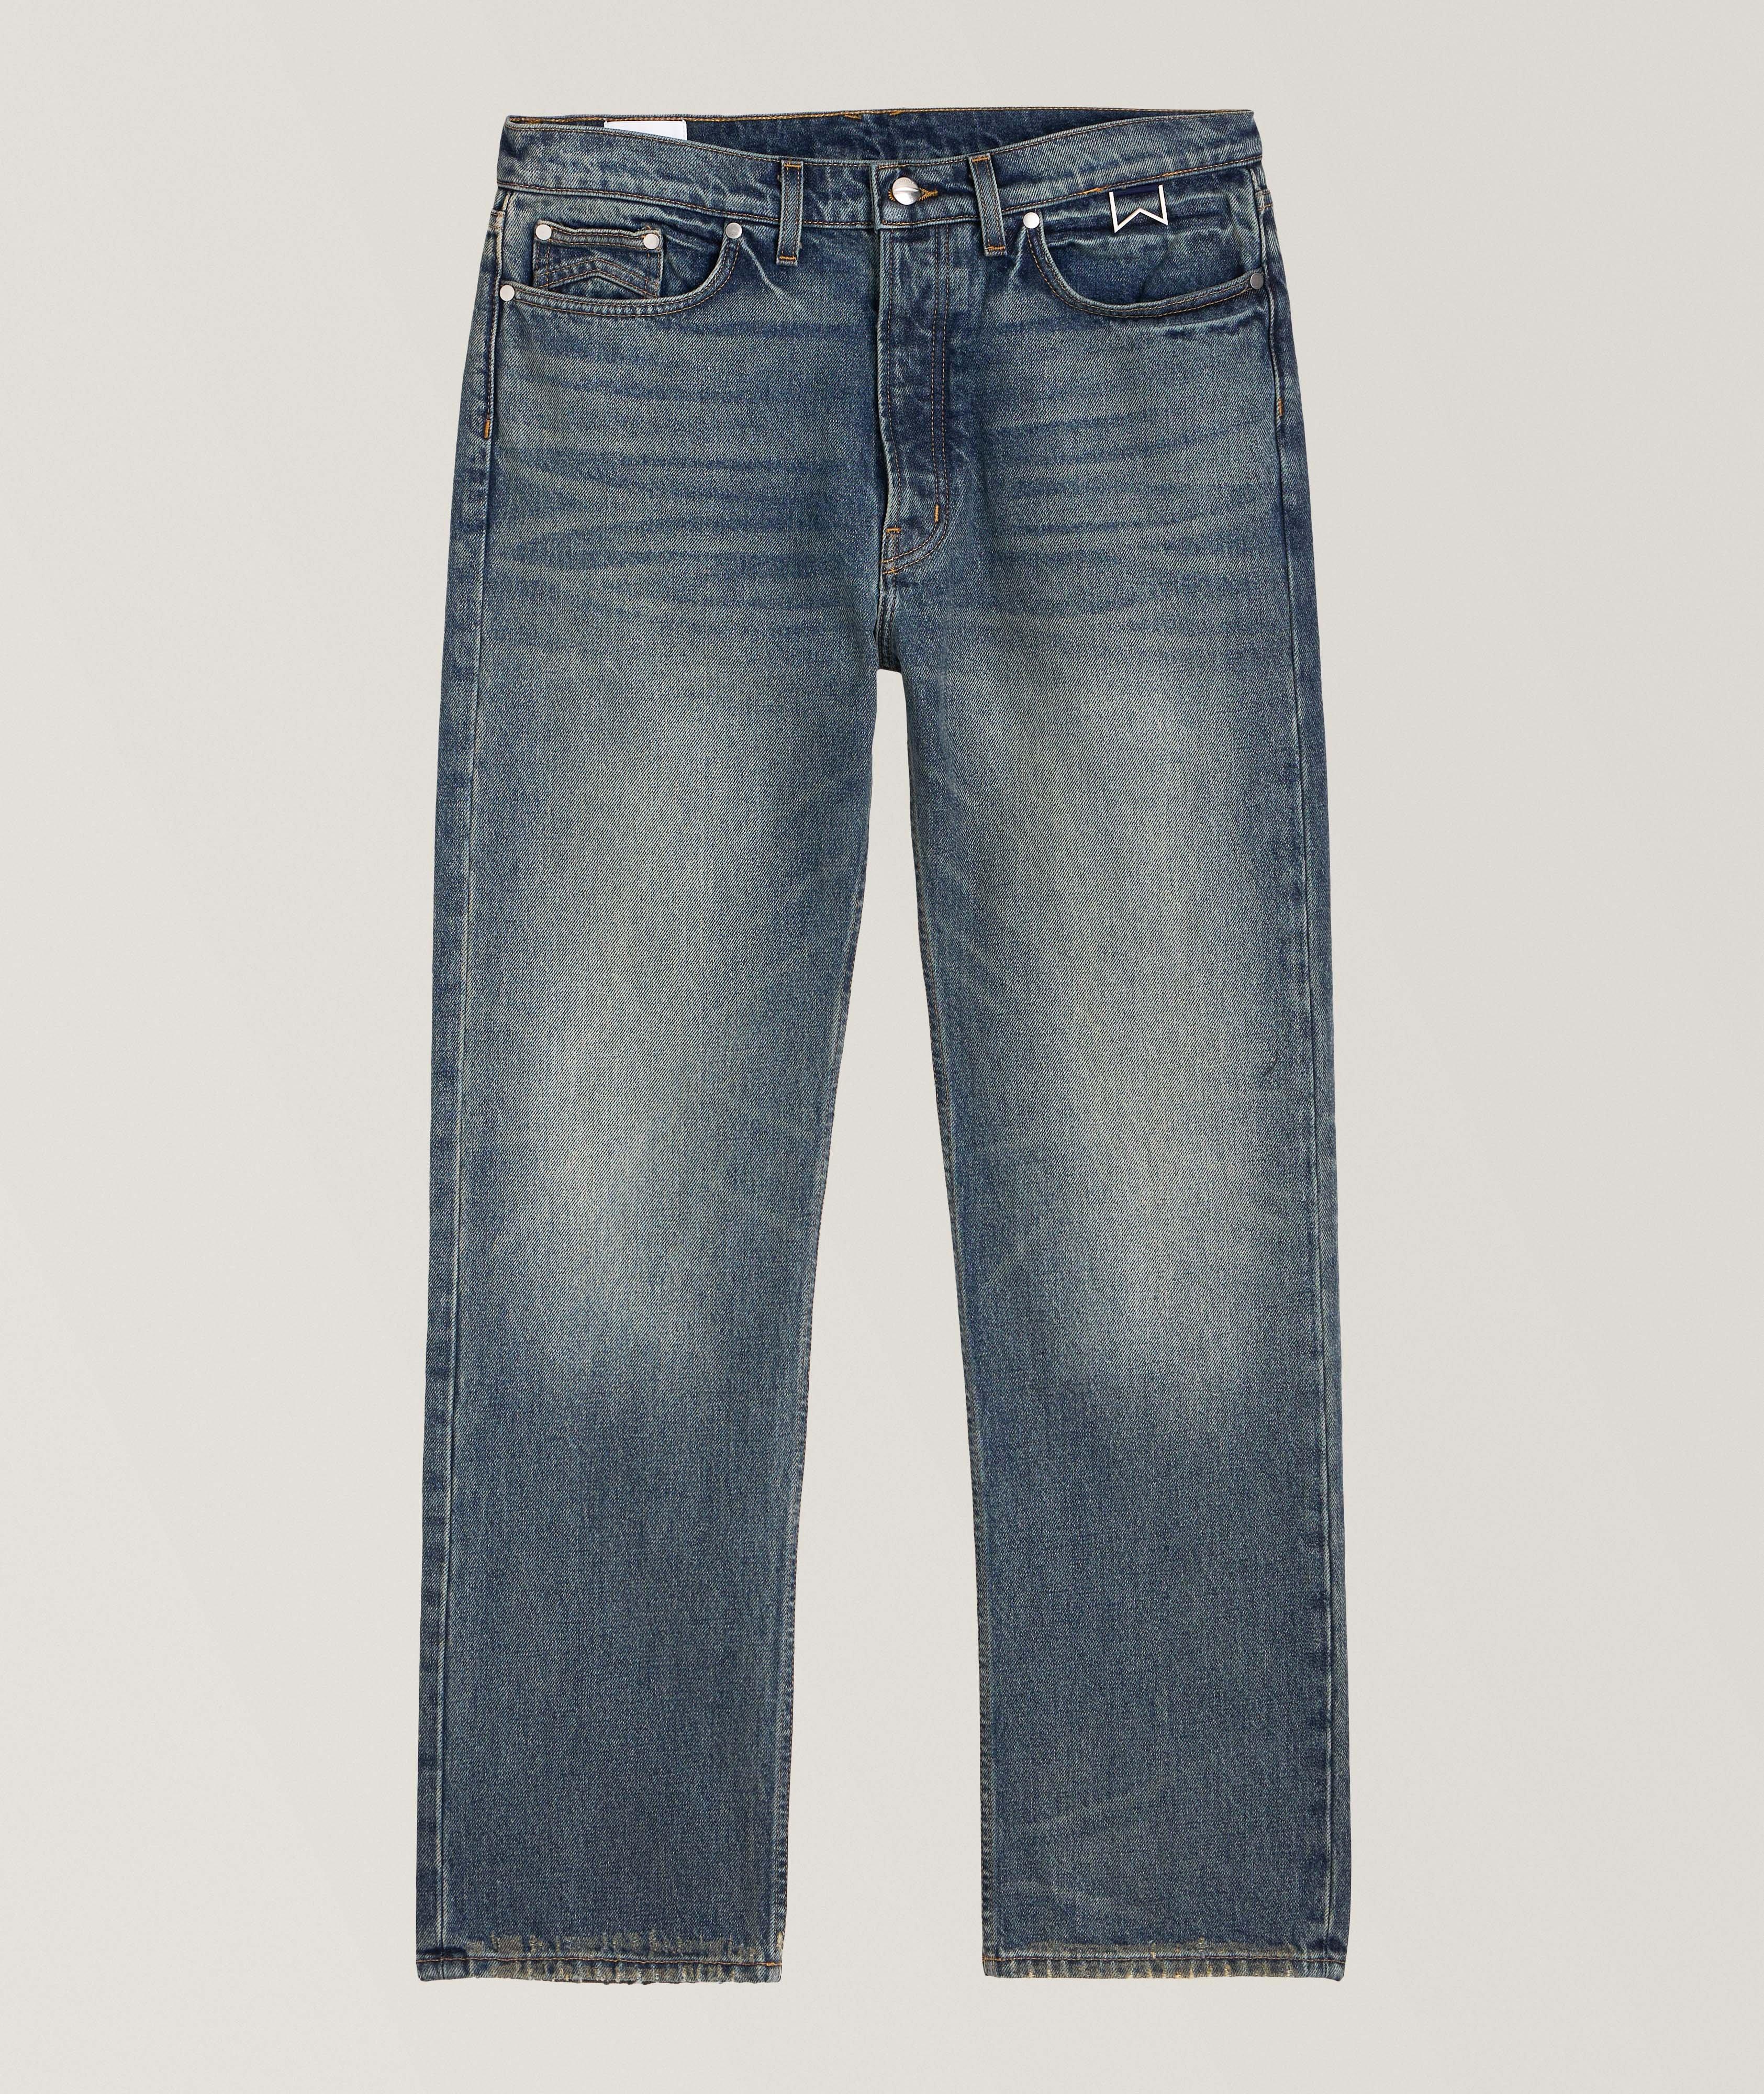 Rhude 90's Cotton Jeans